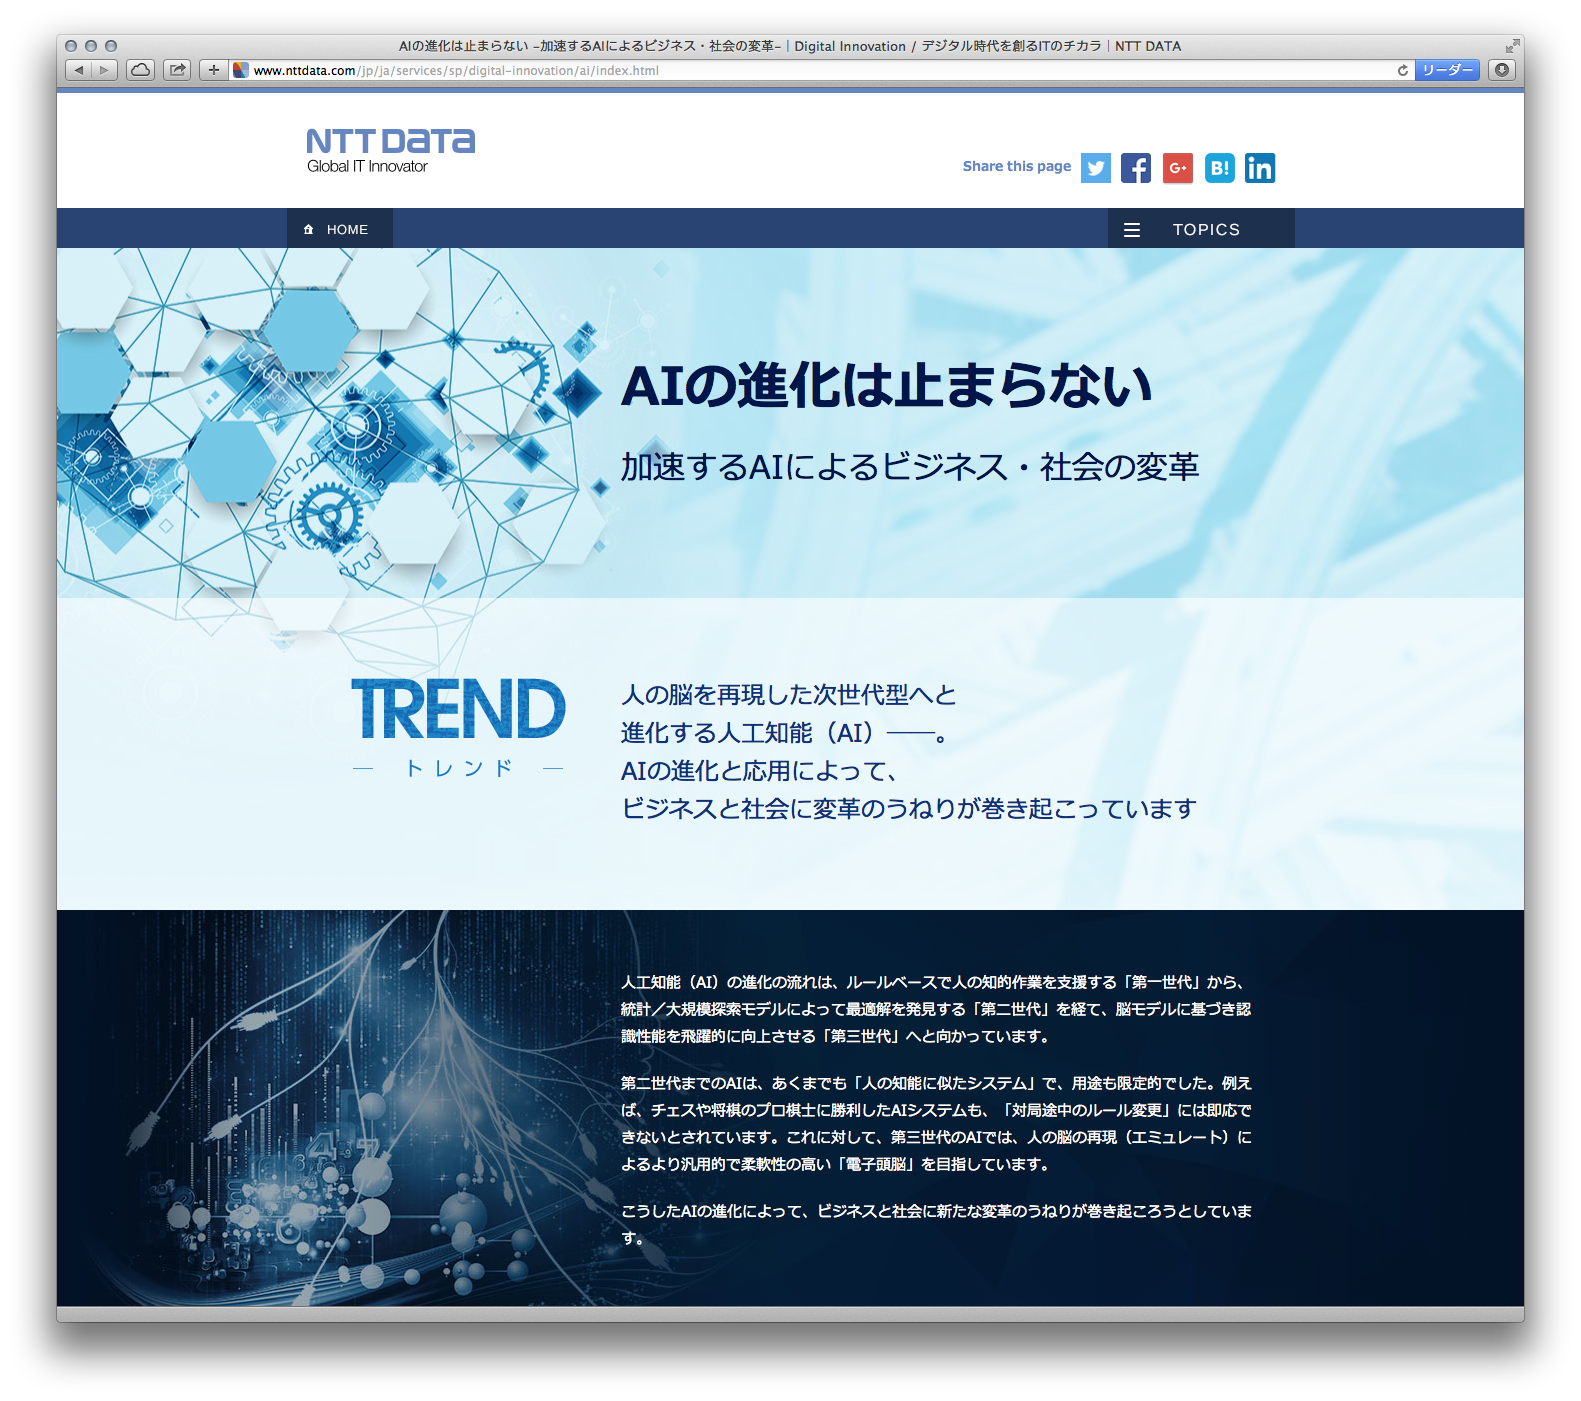 http://www.nttdata.com/jp/ja/services/sp/digital-innovation/ai/index.html